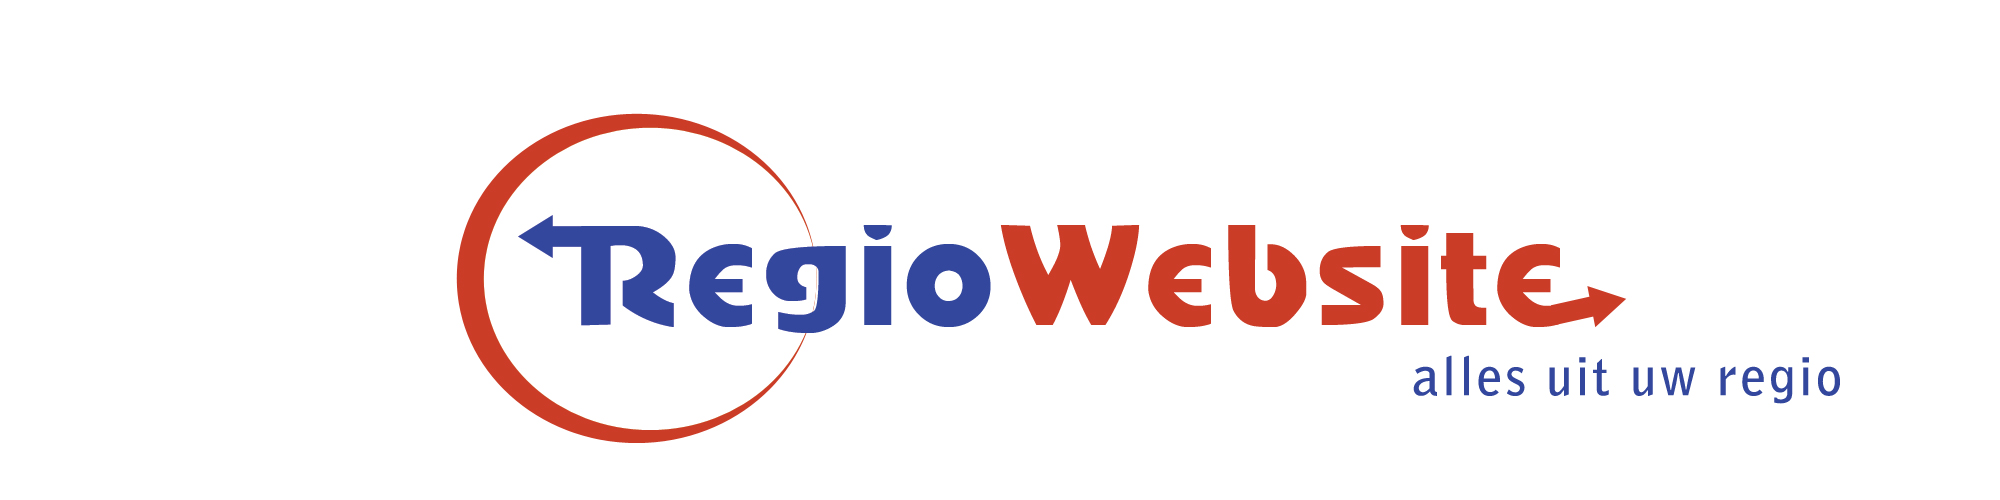 Logo check regiowebsite-regiowebsite3cmyk-jpg-jpg